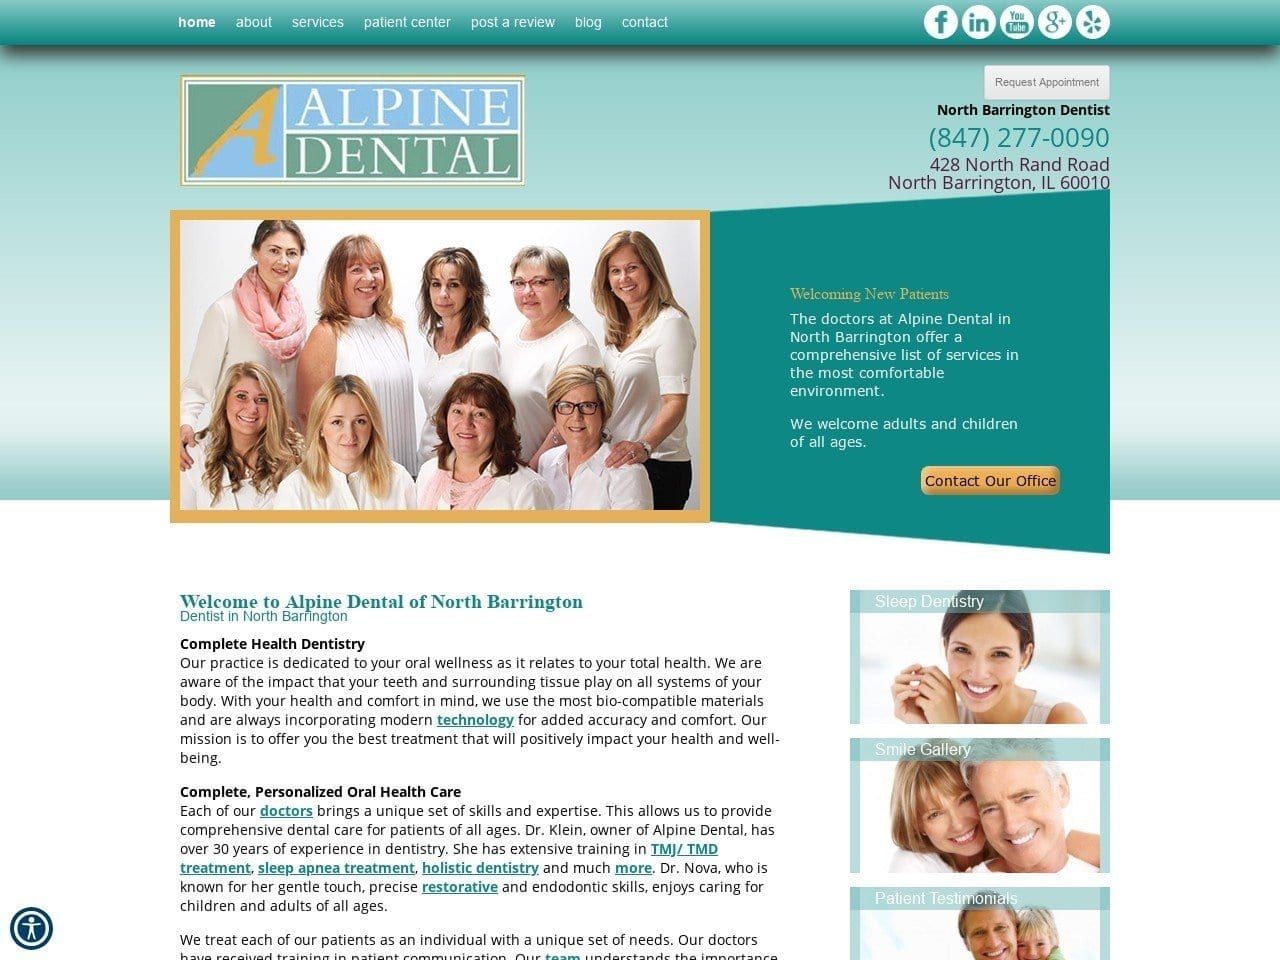 Alpine Dental Website Screenshot from alpinedentalpc.com